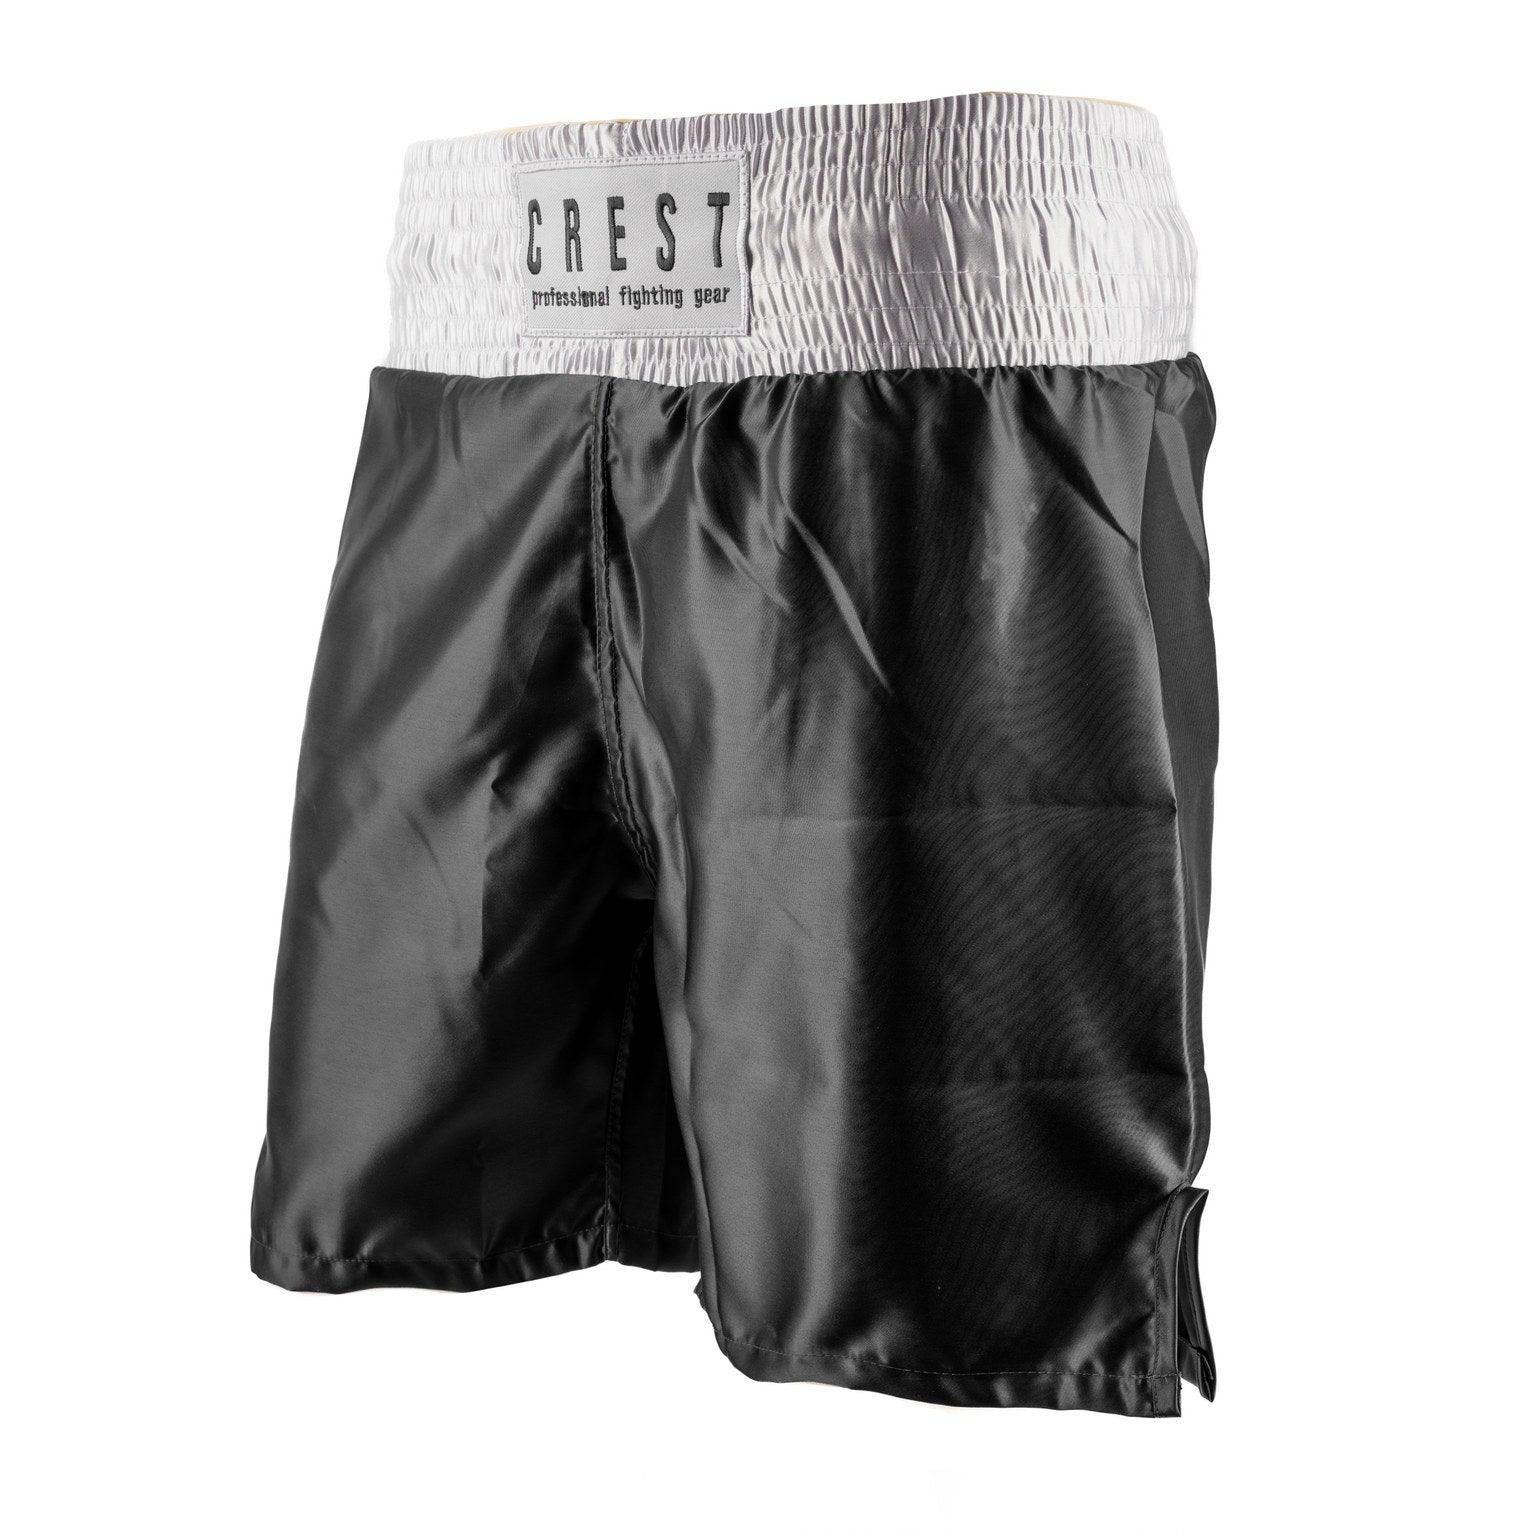 Boxing shorts "C R E S T" - Crest - PFG